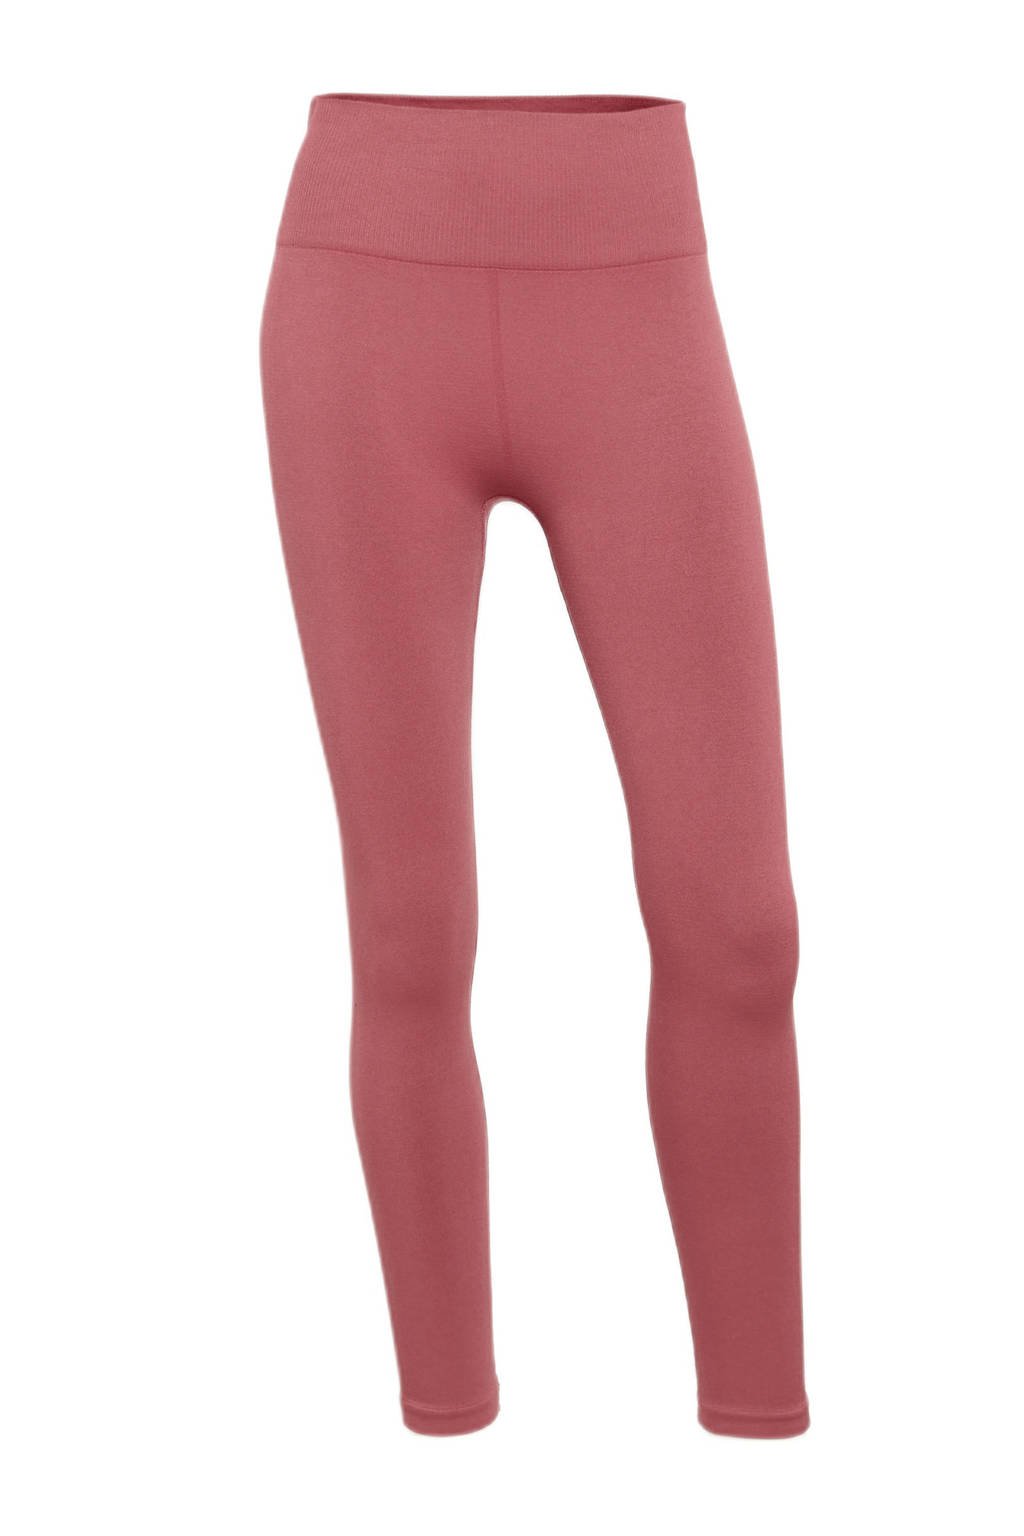 Roze dames Björn Borg sportlegging Sthlm seamless van gerecycled polyester met high waist en elastische tailleband